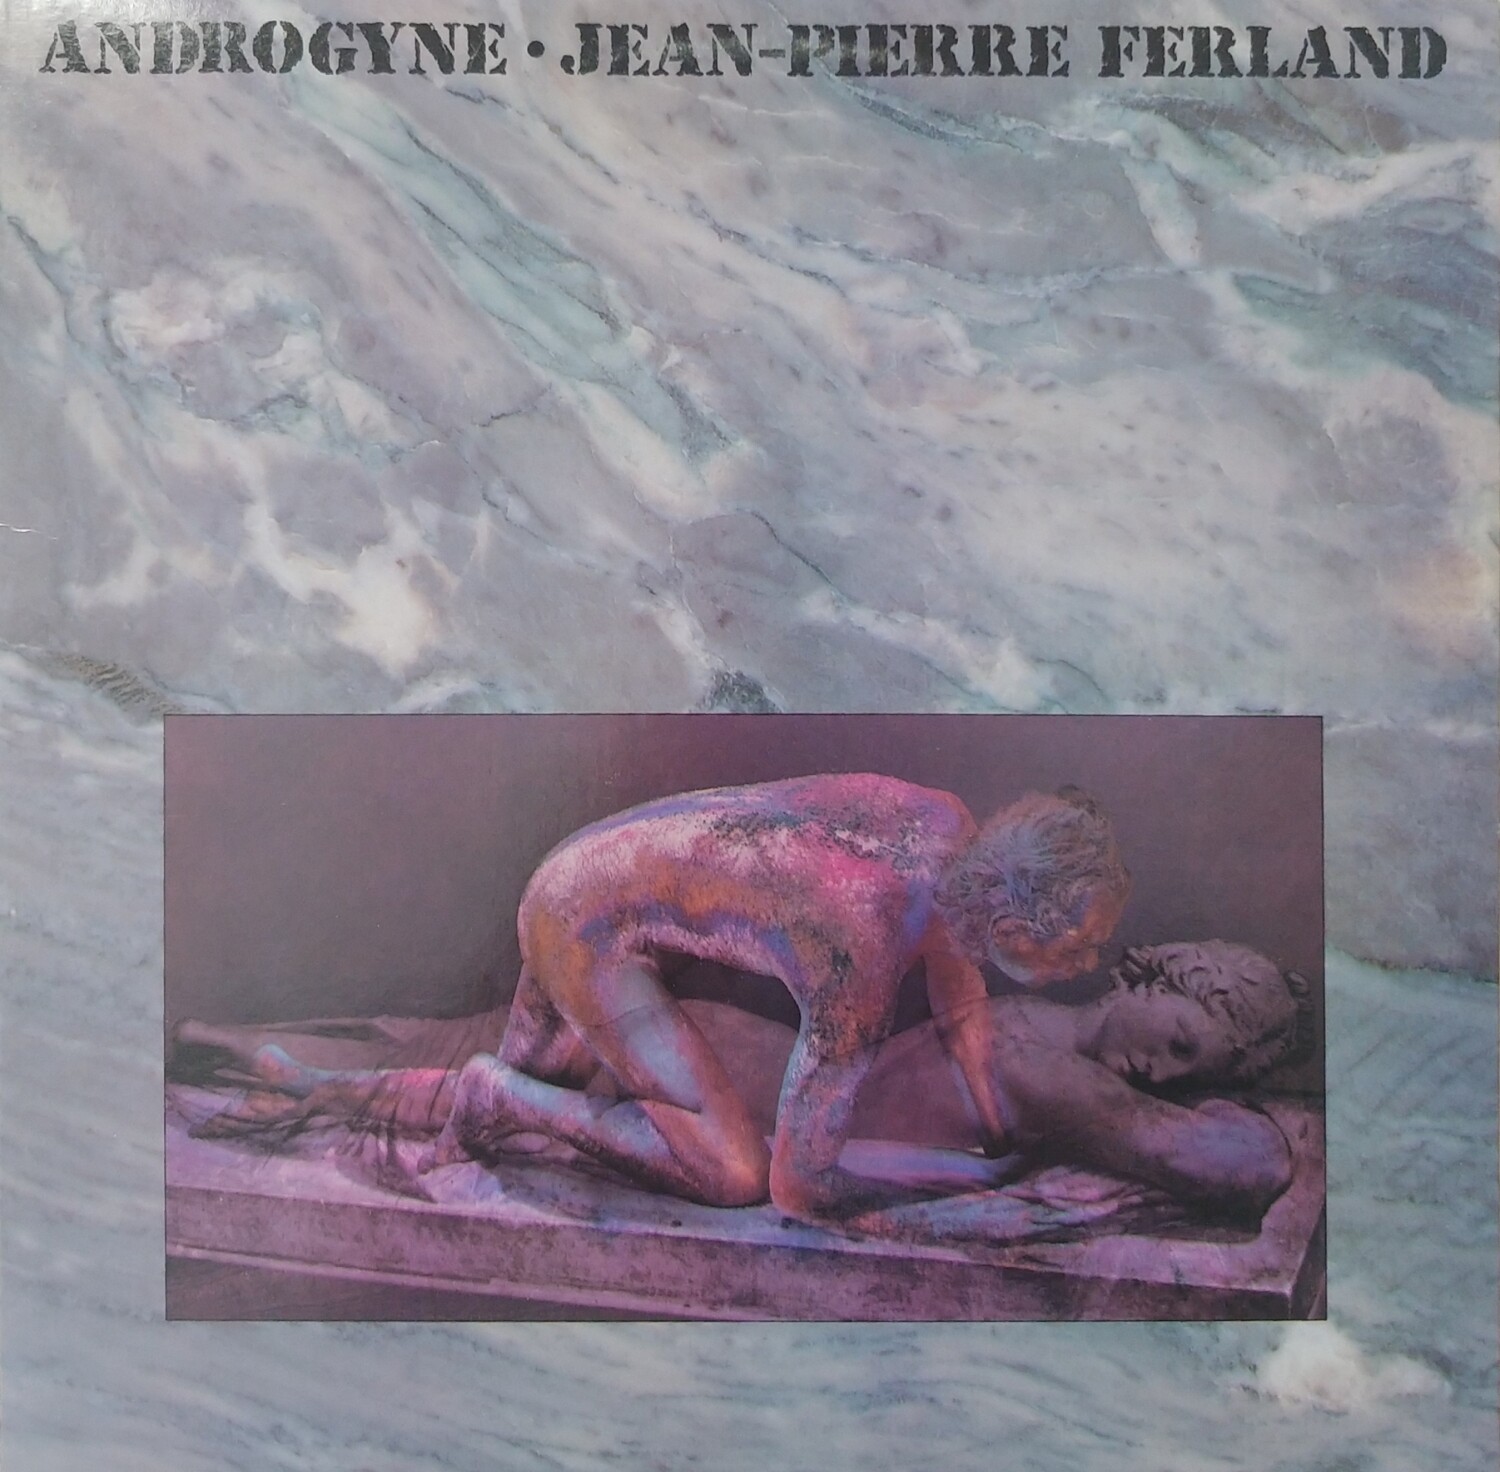 Jean-Pierre Ferland - Androgyne